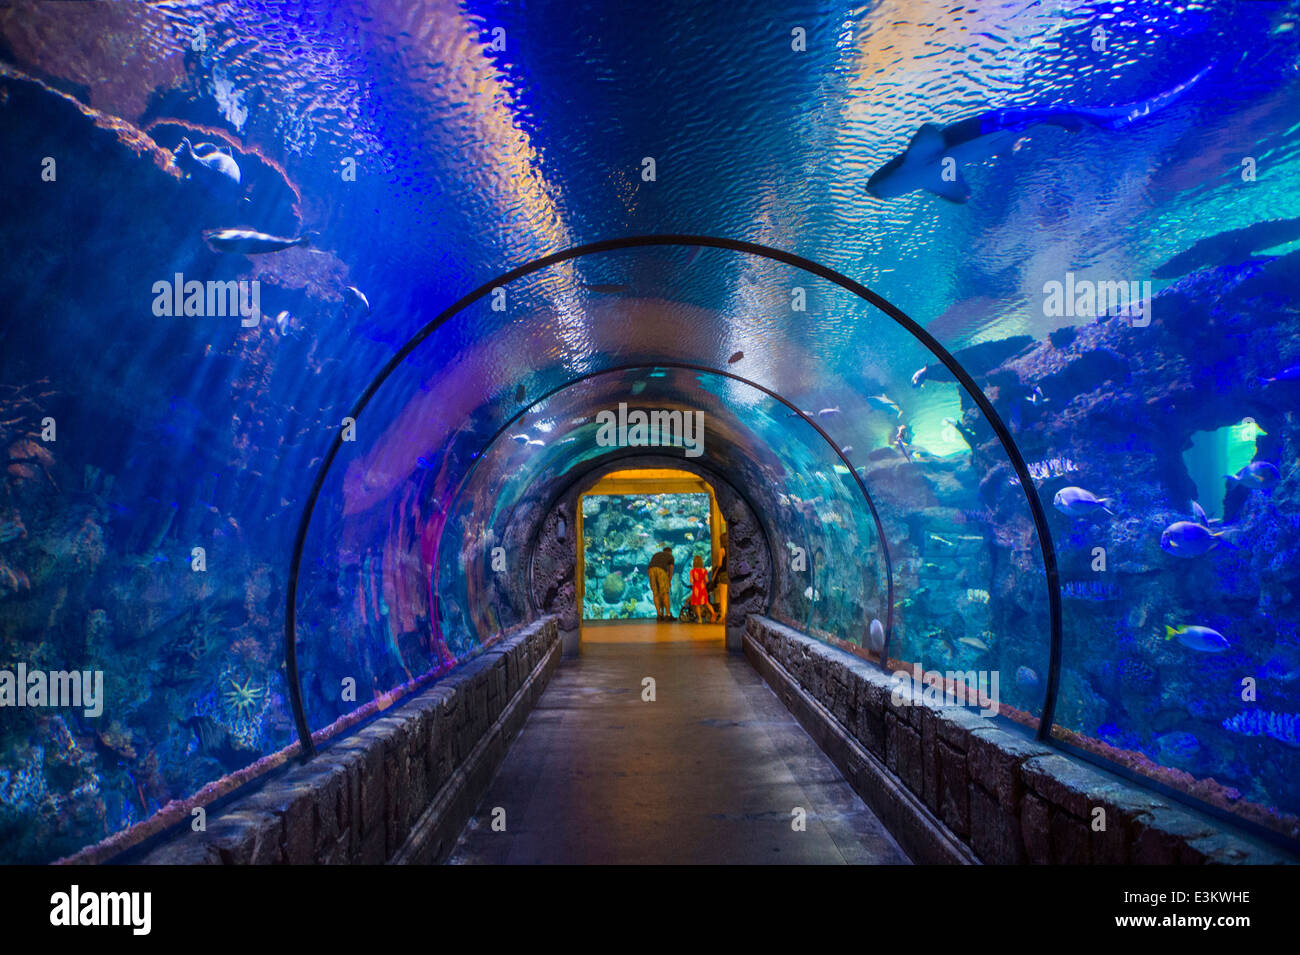 The Shark Reef Aquarium at Mandalay Bay hotel and casino in Las